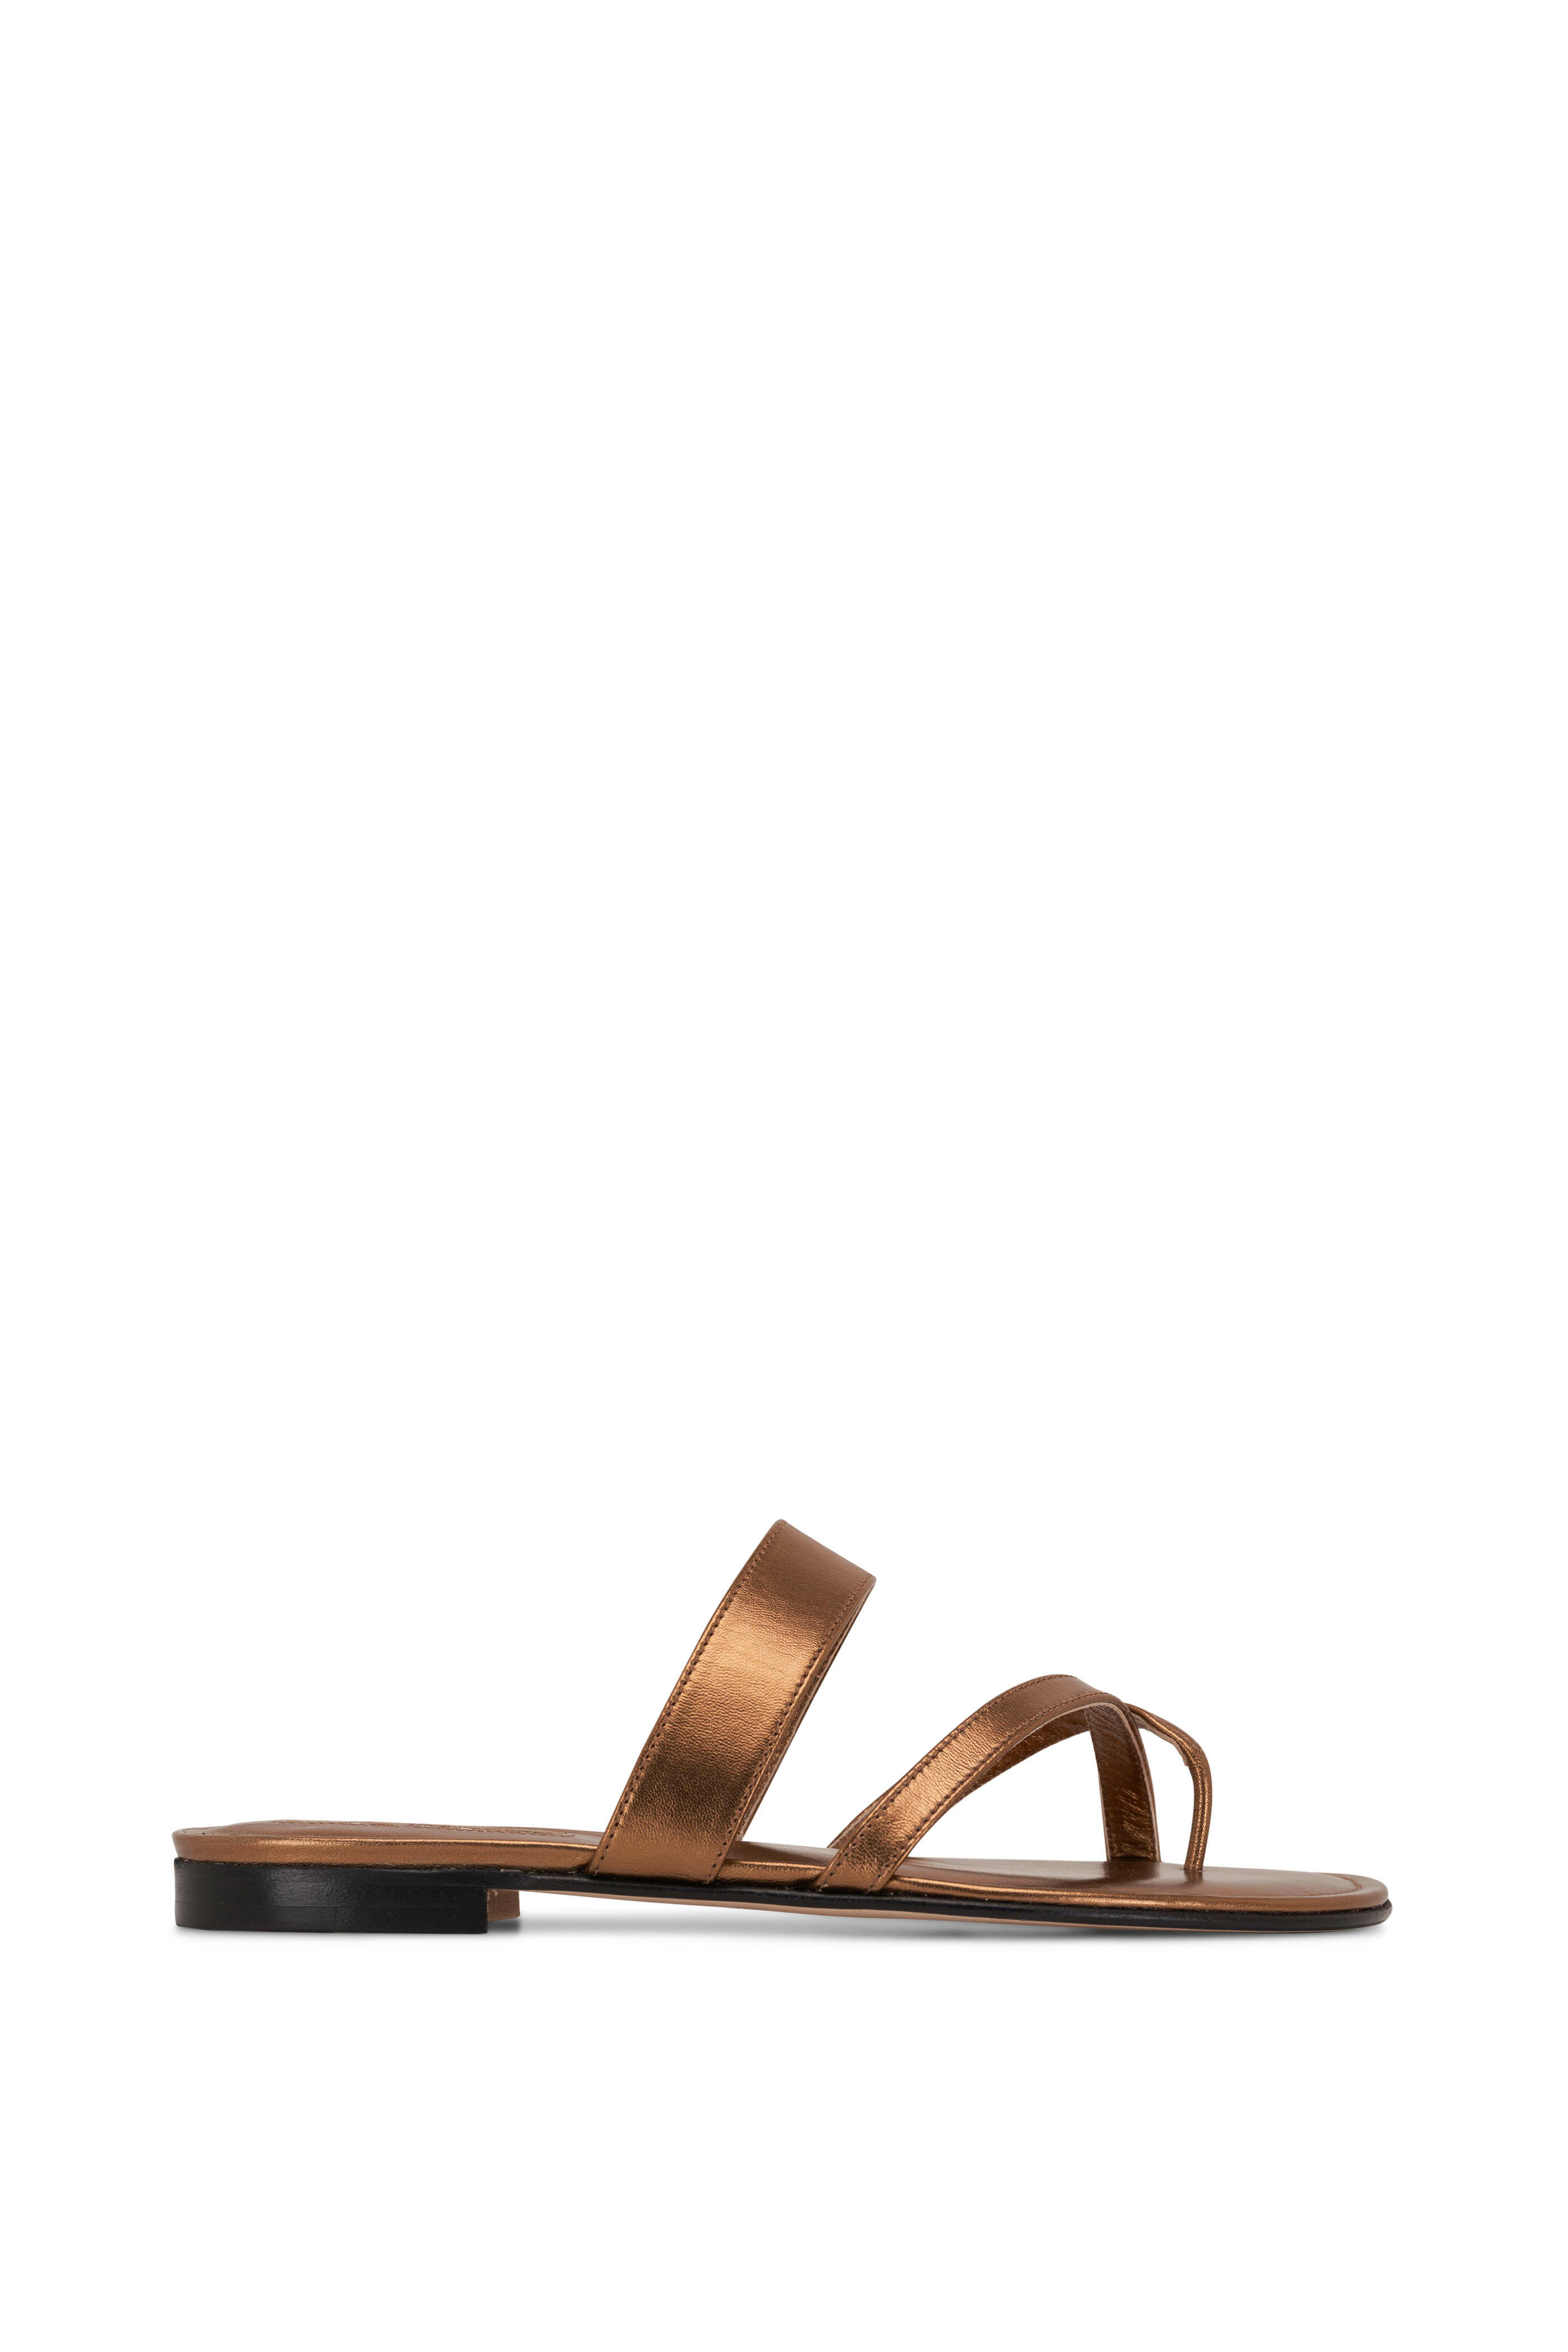 Manolo Blahnik - Susa Bronze Metallic Flat Sandal, 10mm